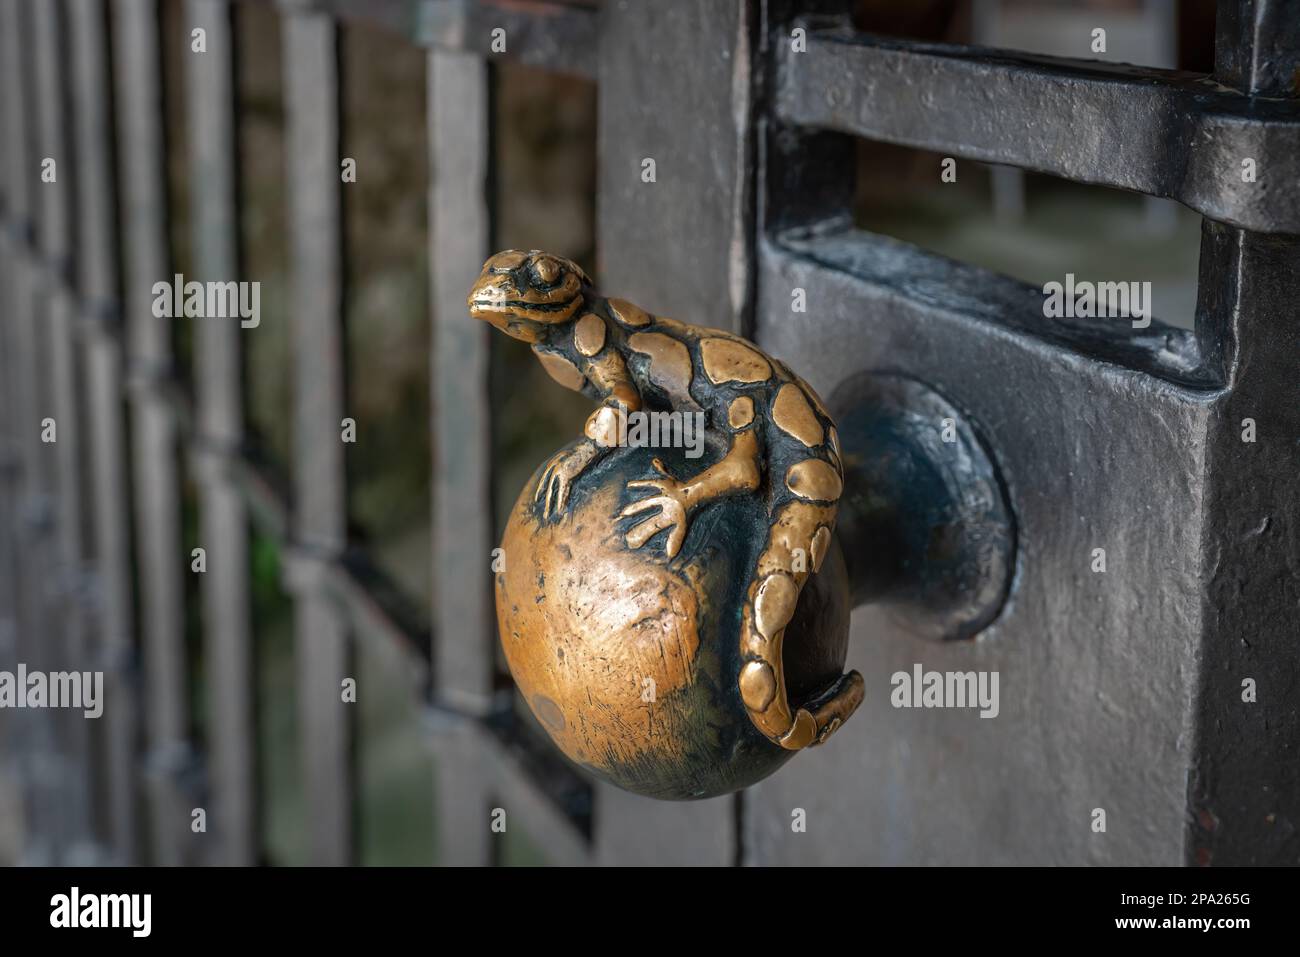 Salamander doorknob of Grotto entrance at Heidelberg Castle Gardens (Hortus Palatinus) - Heidelberg, Germany Stock Photo